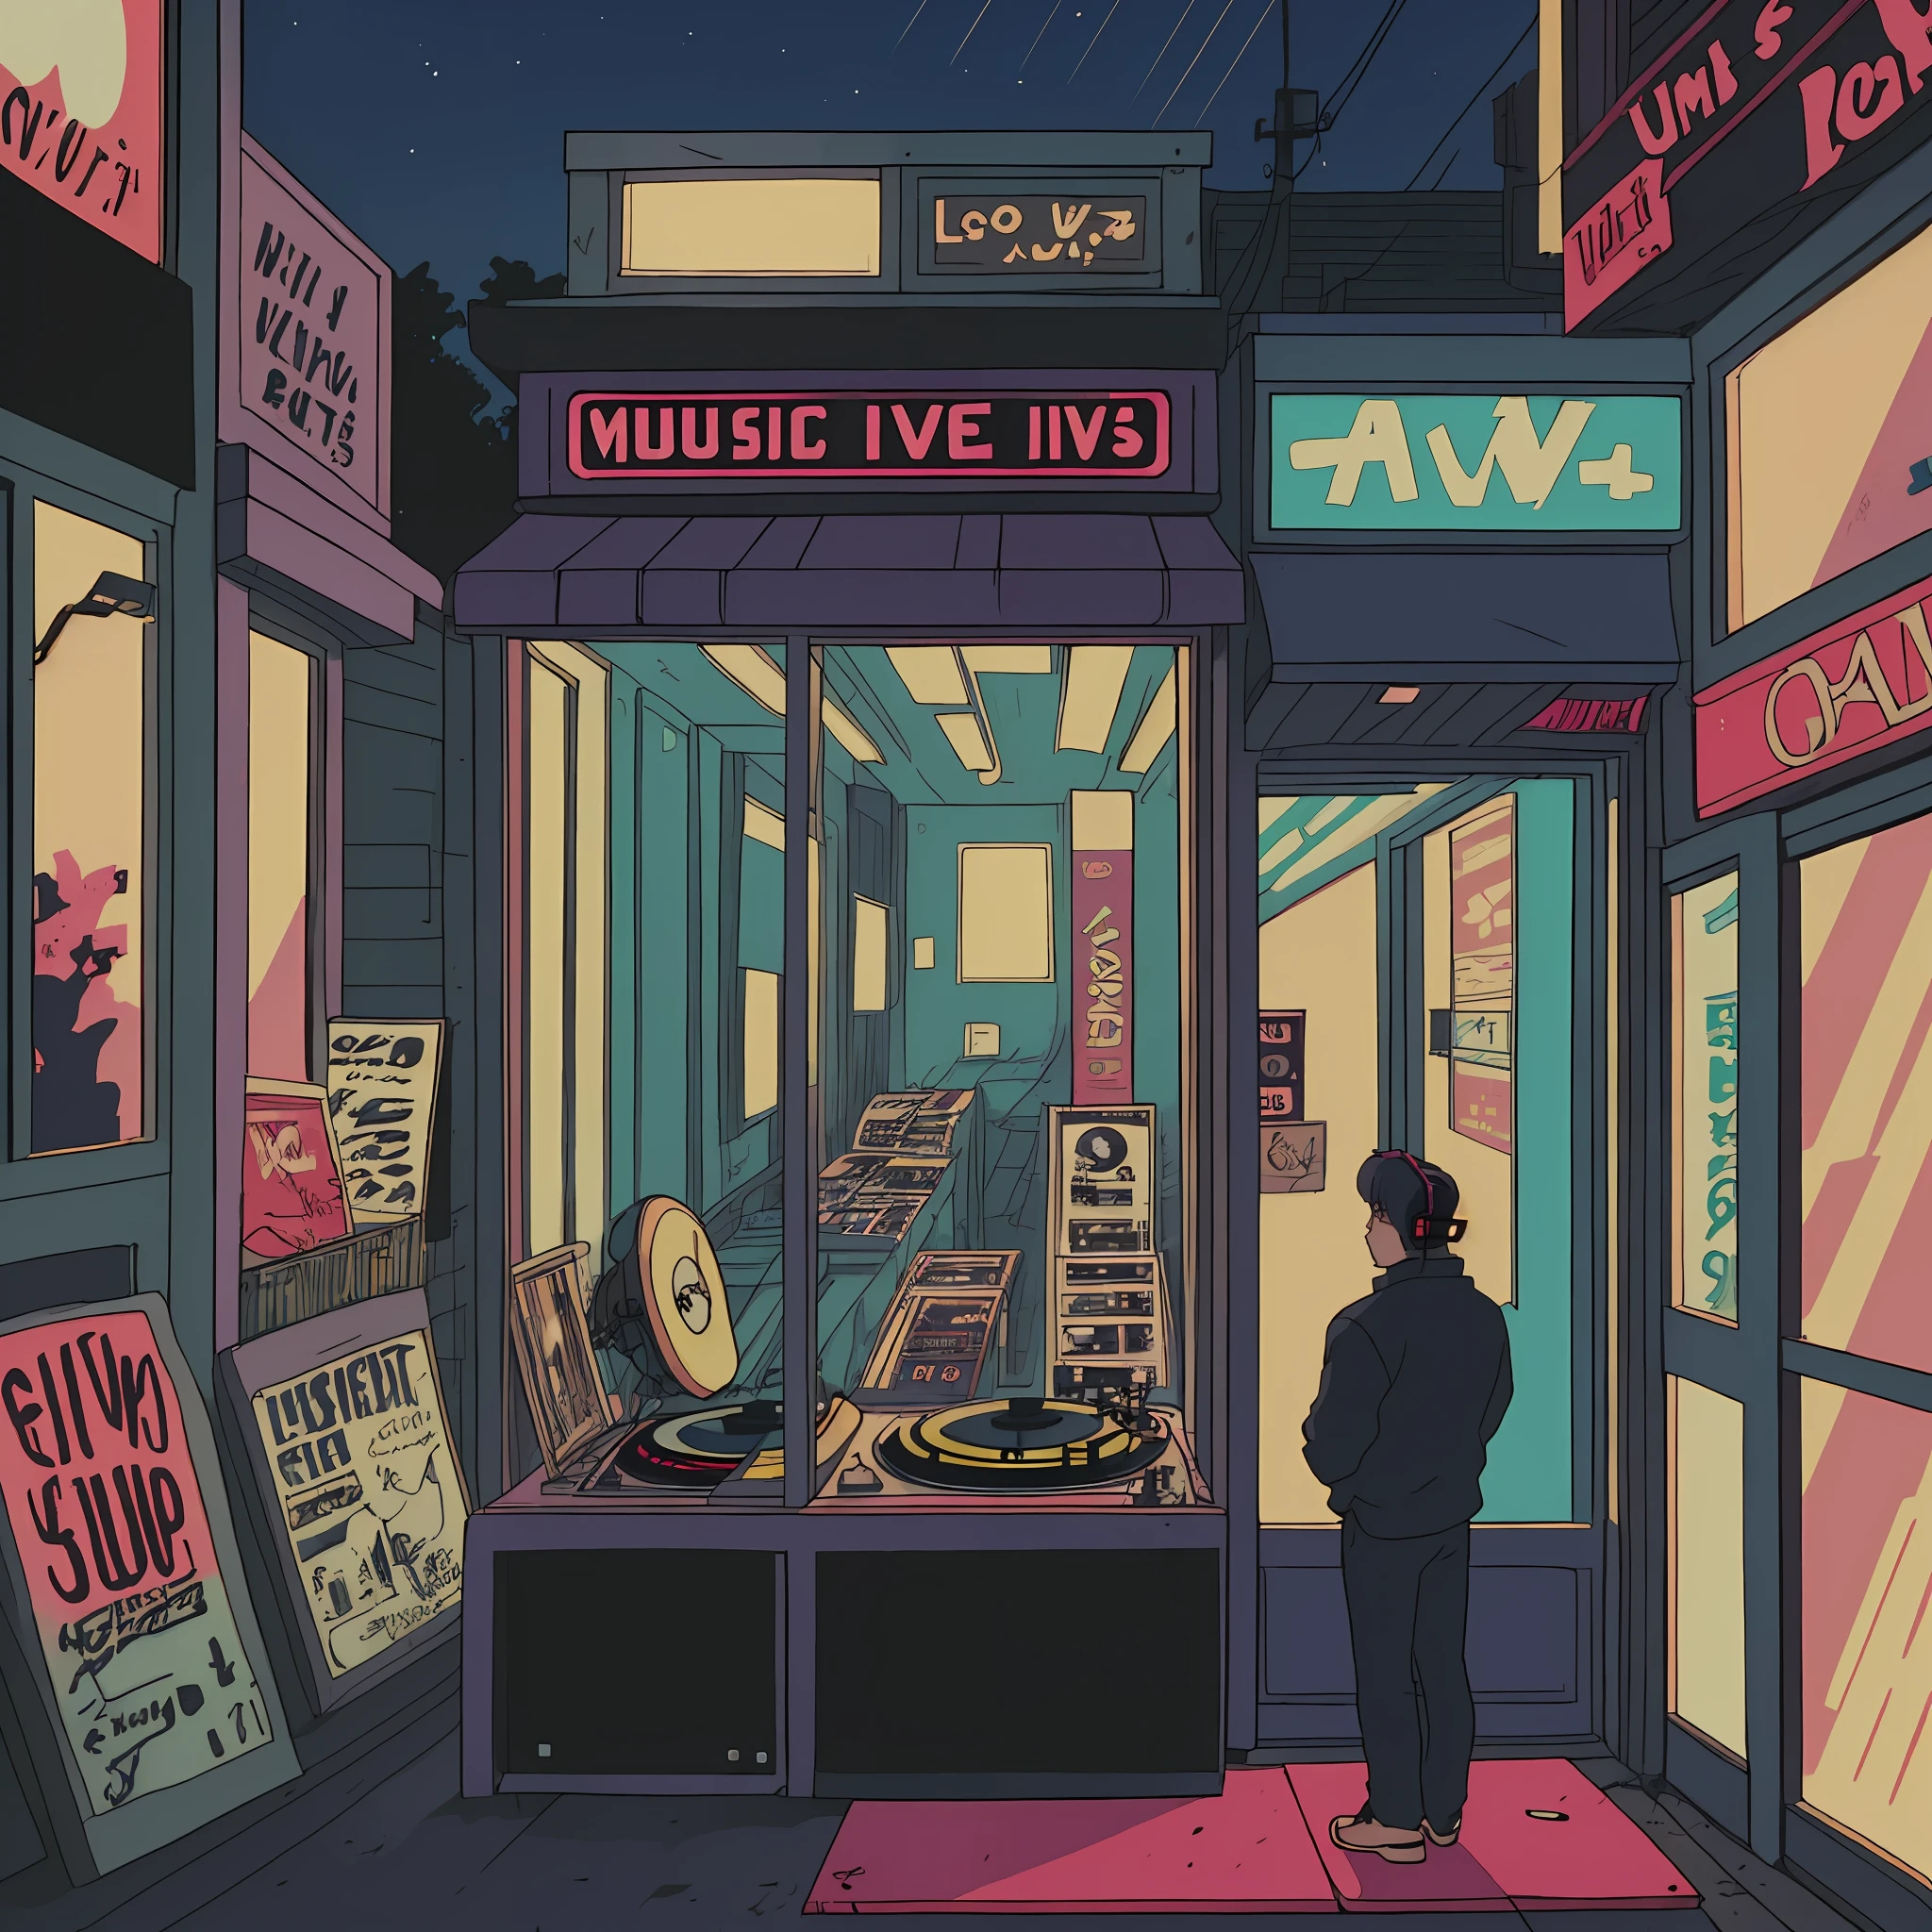 View of a man listening to music with headphone in ไวนิล record shop, ส่งข้อความว่าทำไมถึงเป็นคุณ, WHY YOU โลโก้, รายละเอียดสุดยอด, เรโทรเวฟ, ไซเบอร์พังค์, บรรยากาศเศร้า, กลางคืน light through the window, กลางคืน vibes, 2D, (ยิงยาว), ภาพมุมกว้าง, (เสียงฟิล์ม), การ์ตูนเก่า, (บันทึกมากมาย:1.3), (ผลงานชิ้นเอก, คุณภาพสูงสุด, คุณภาพสูงสุด, ศิลปะอย่างเป็นทางการ, สวยงามและสวยงาม: 1.2), (รายละเอียดมาก, (ศิลปะเศษส่วน: 1.4), กีตาร์, (บันทึกย่อ: 1.4), ( โล-ไฟ ฮิปฮอป), วิวในห้องและริมหน้าต่าง, พื้นผิวอะนิเมะเก่า, ตามลำพัง, ลำโพง, ไวนิล, กลางคืน, โลโก้, รายละเอียดไฟเมือง, วิวเมืองผ่านหน้าต่าง